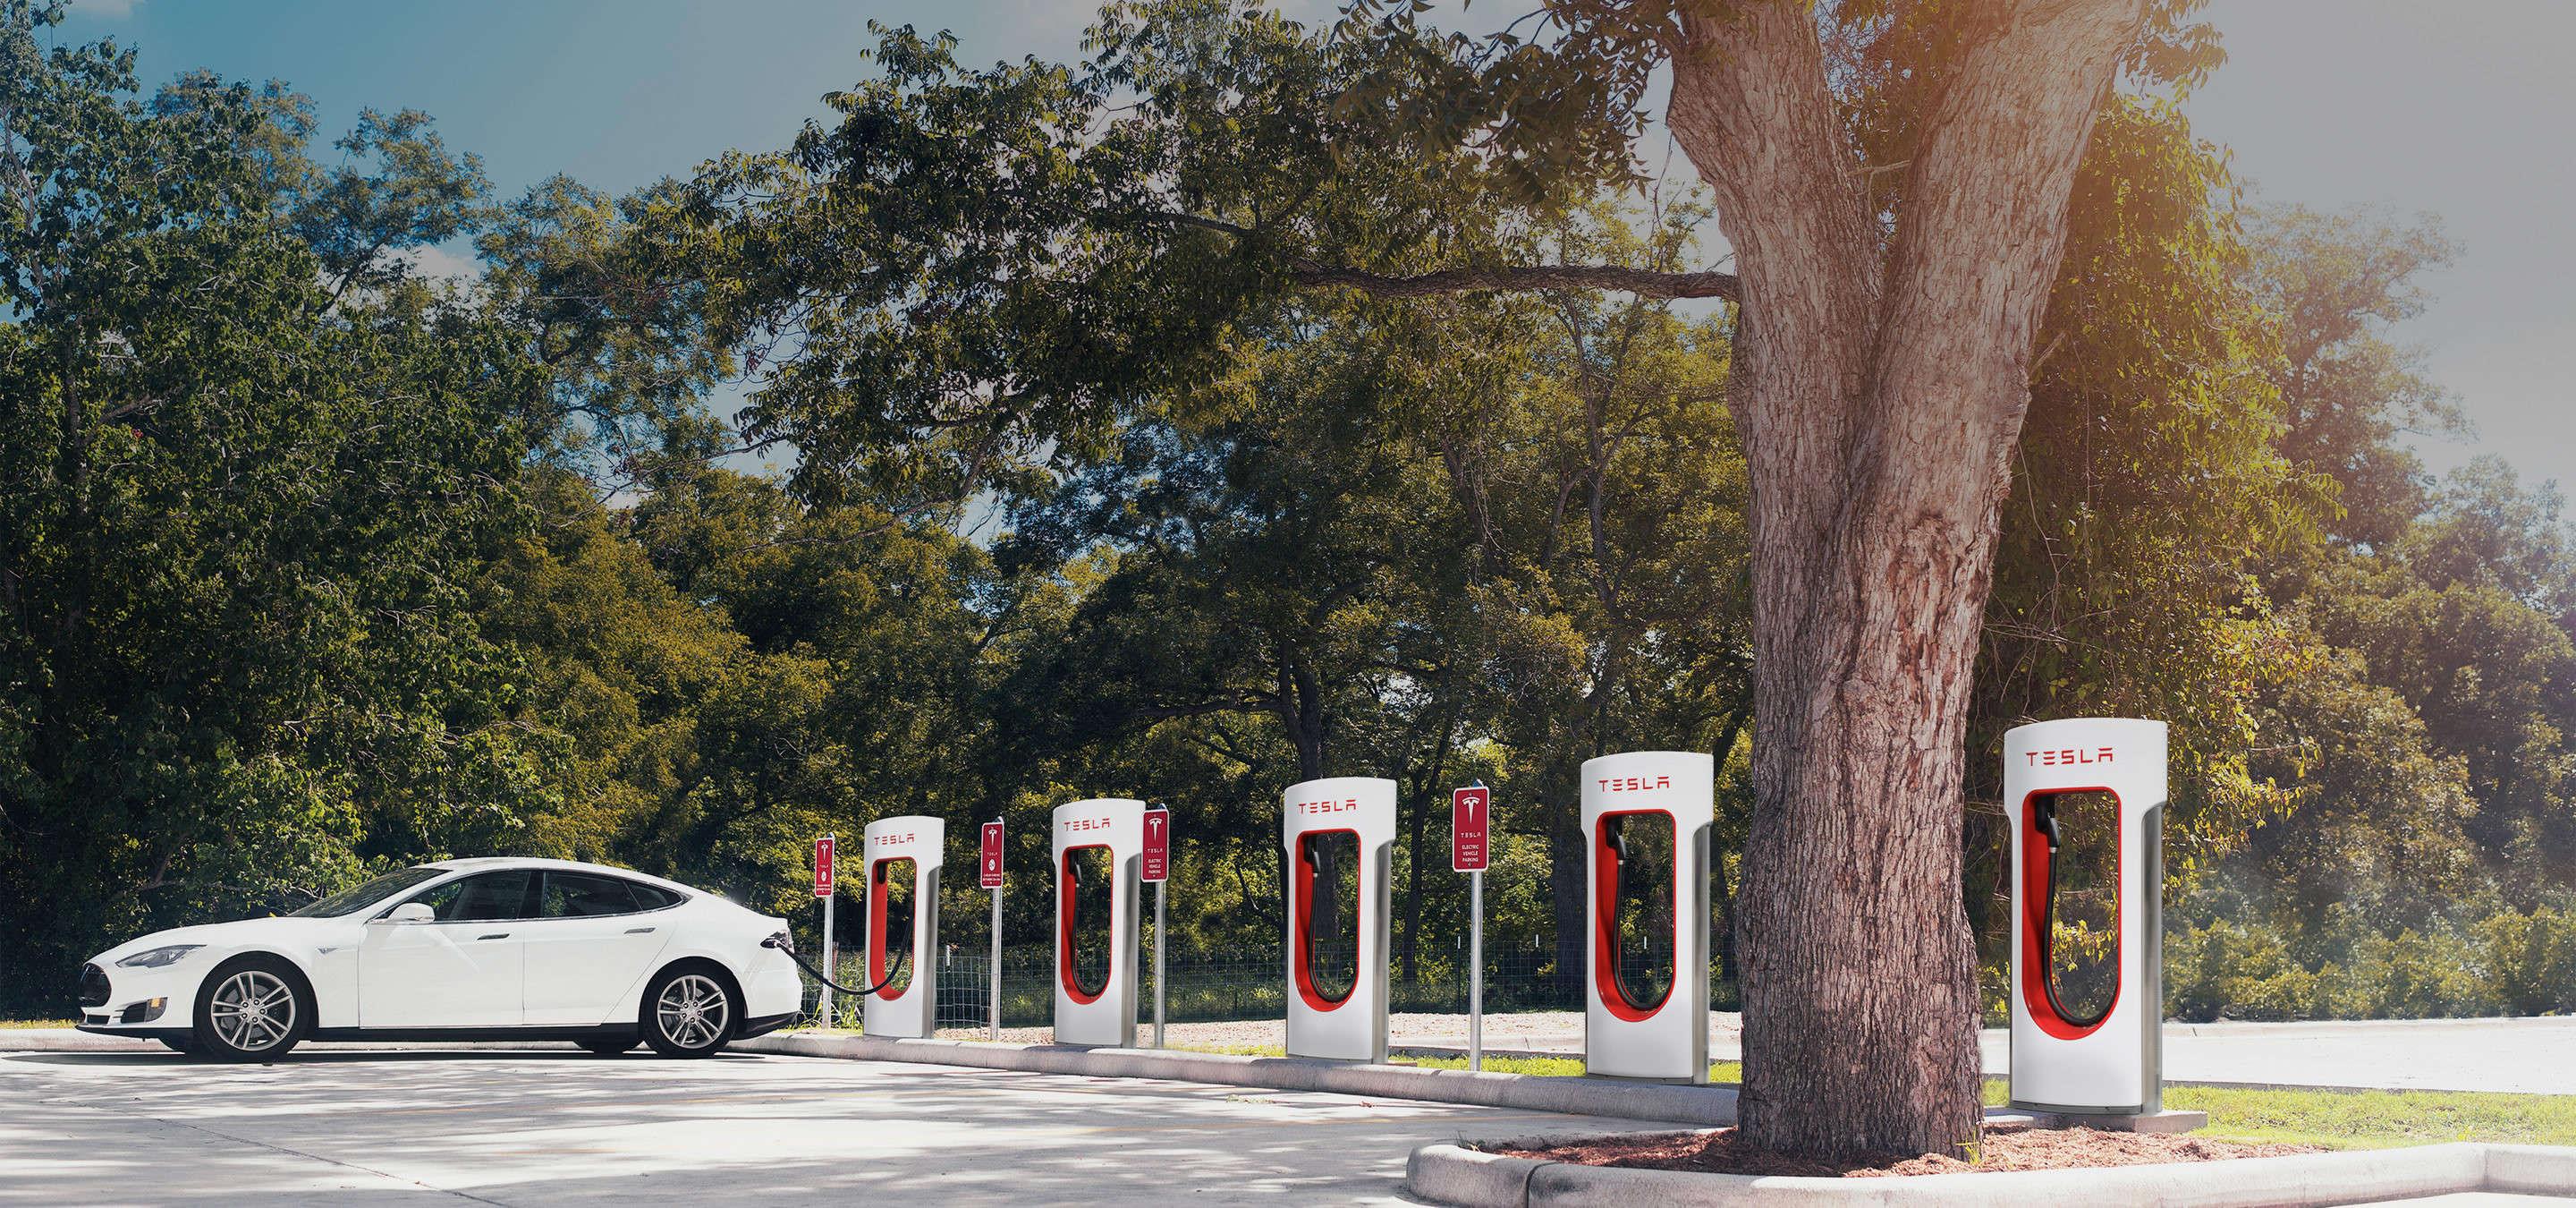 Tesla Supercharger Logo - Supercharging Your Tesla Will No Longer Be Free | Inverse